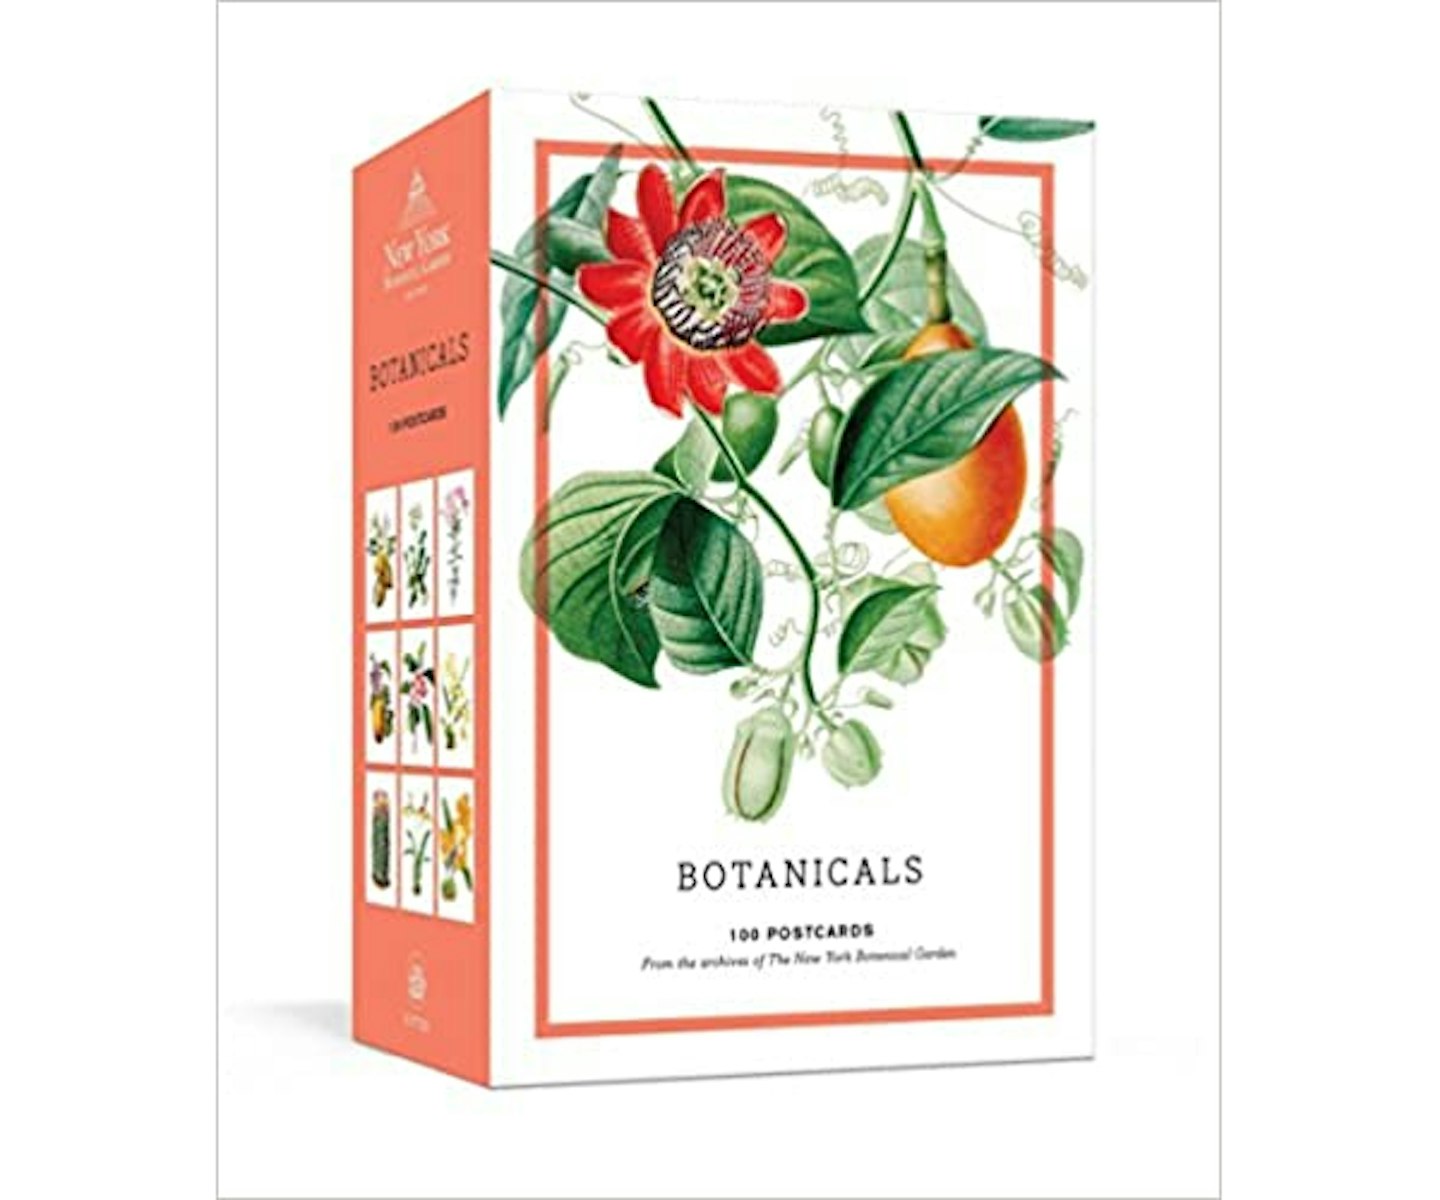 Botanical drinks